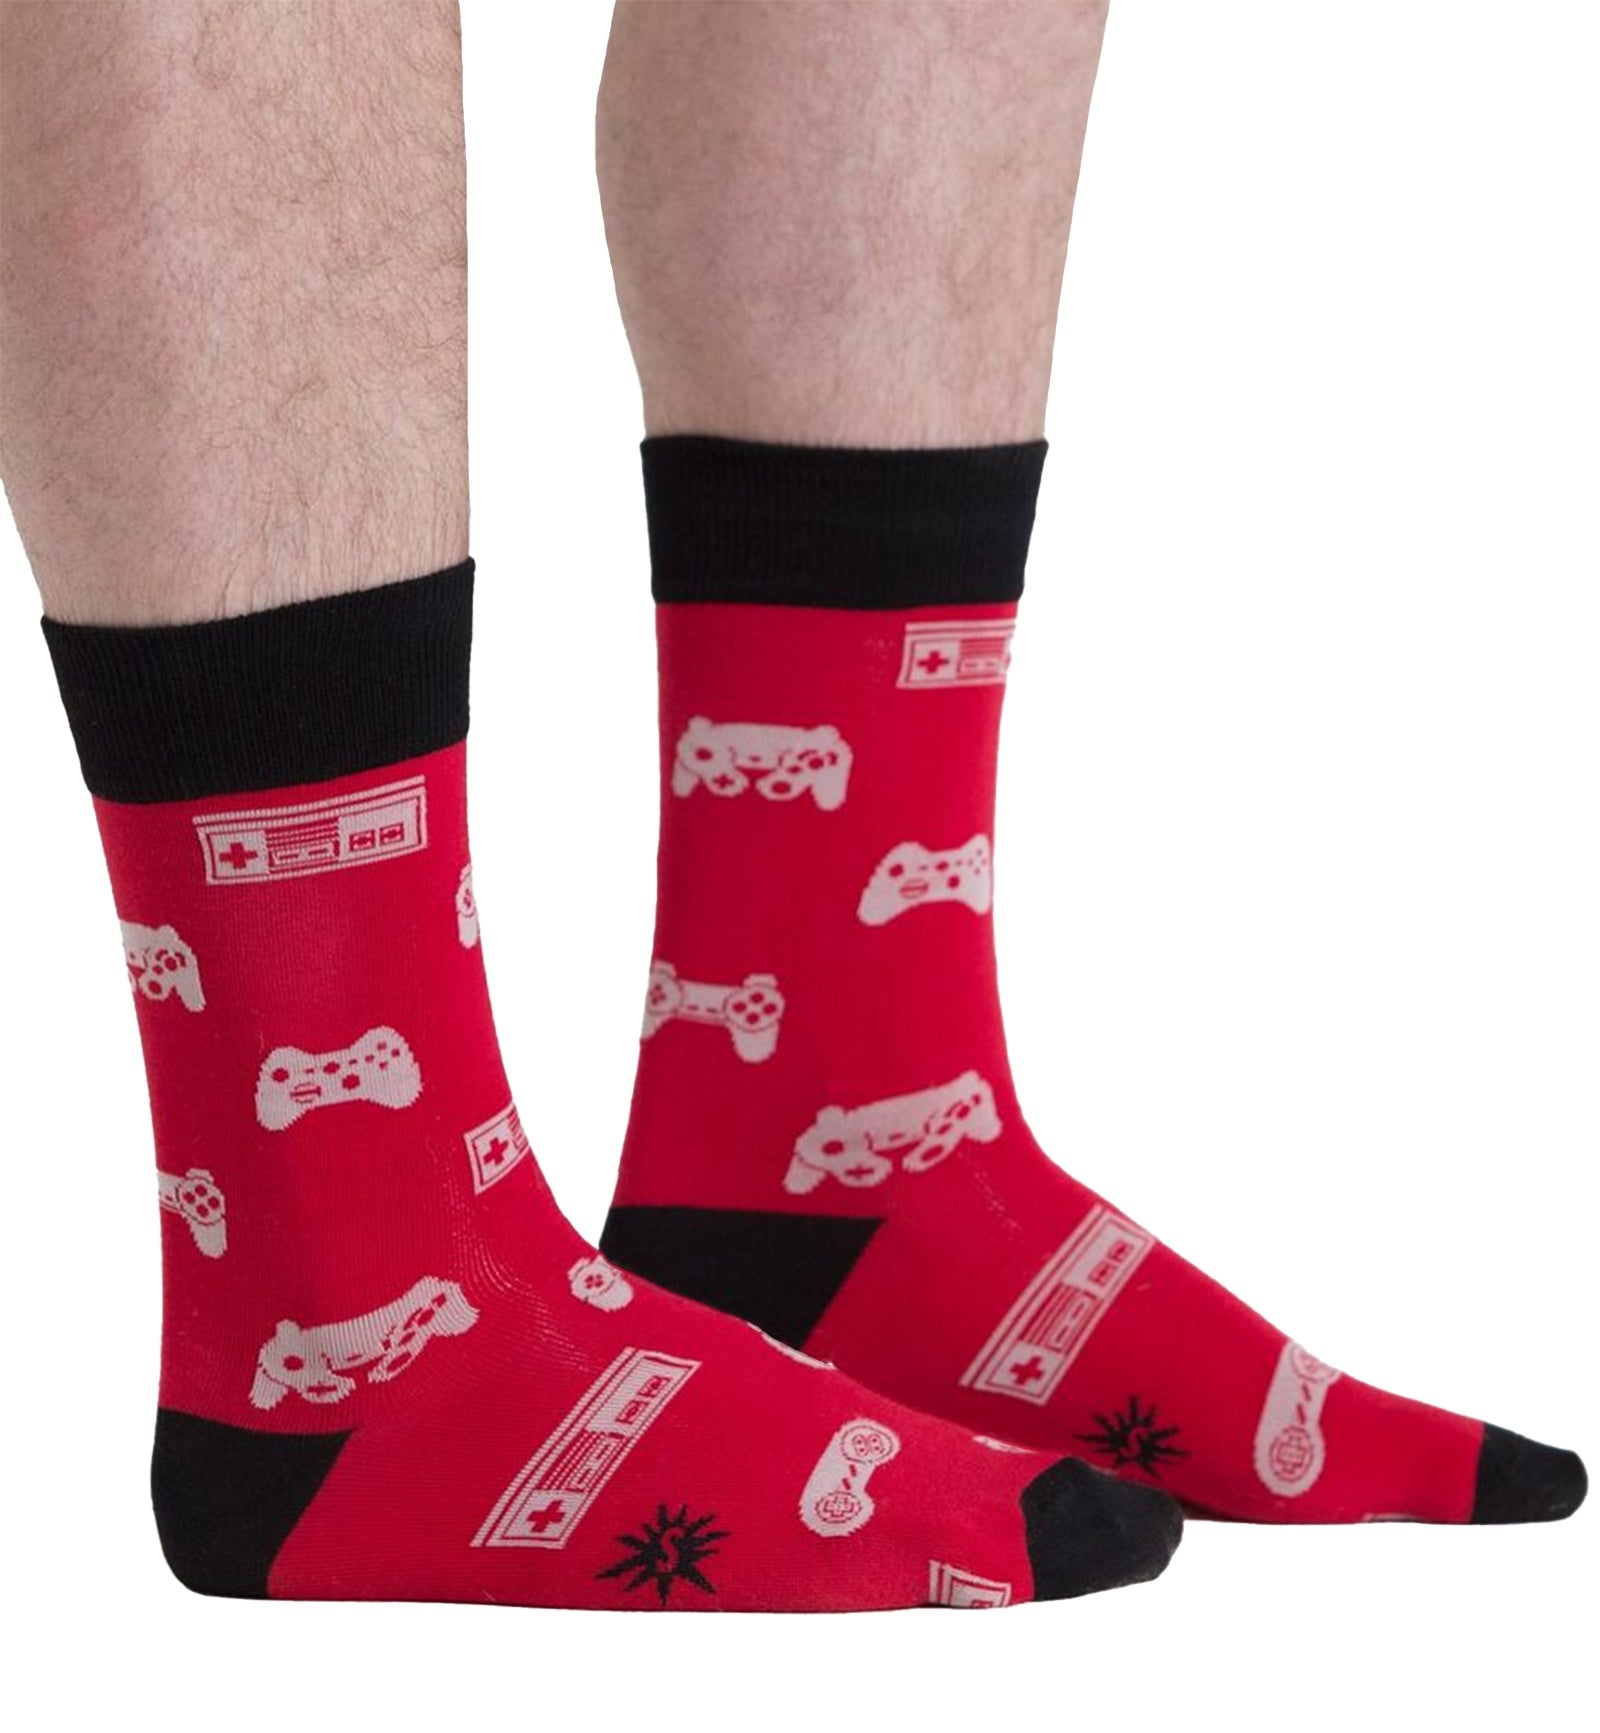 SOCK it to me Men's Crew Socks (mef0112),Multi Player - Multi Player,One Size